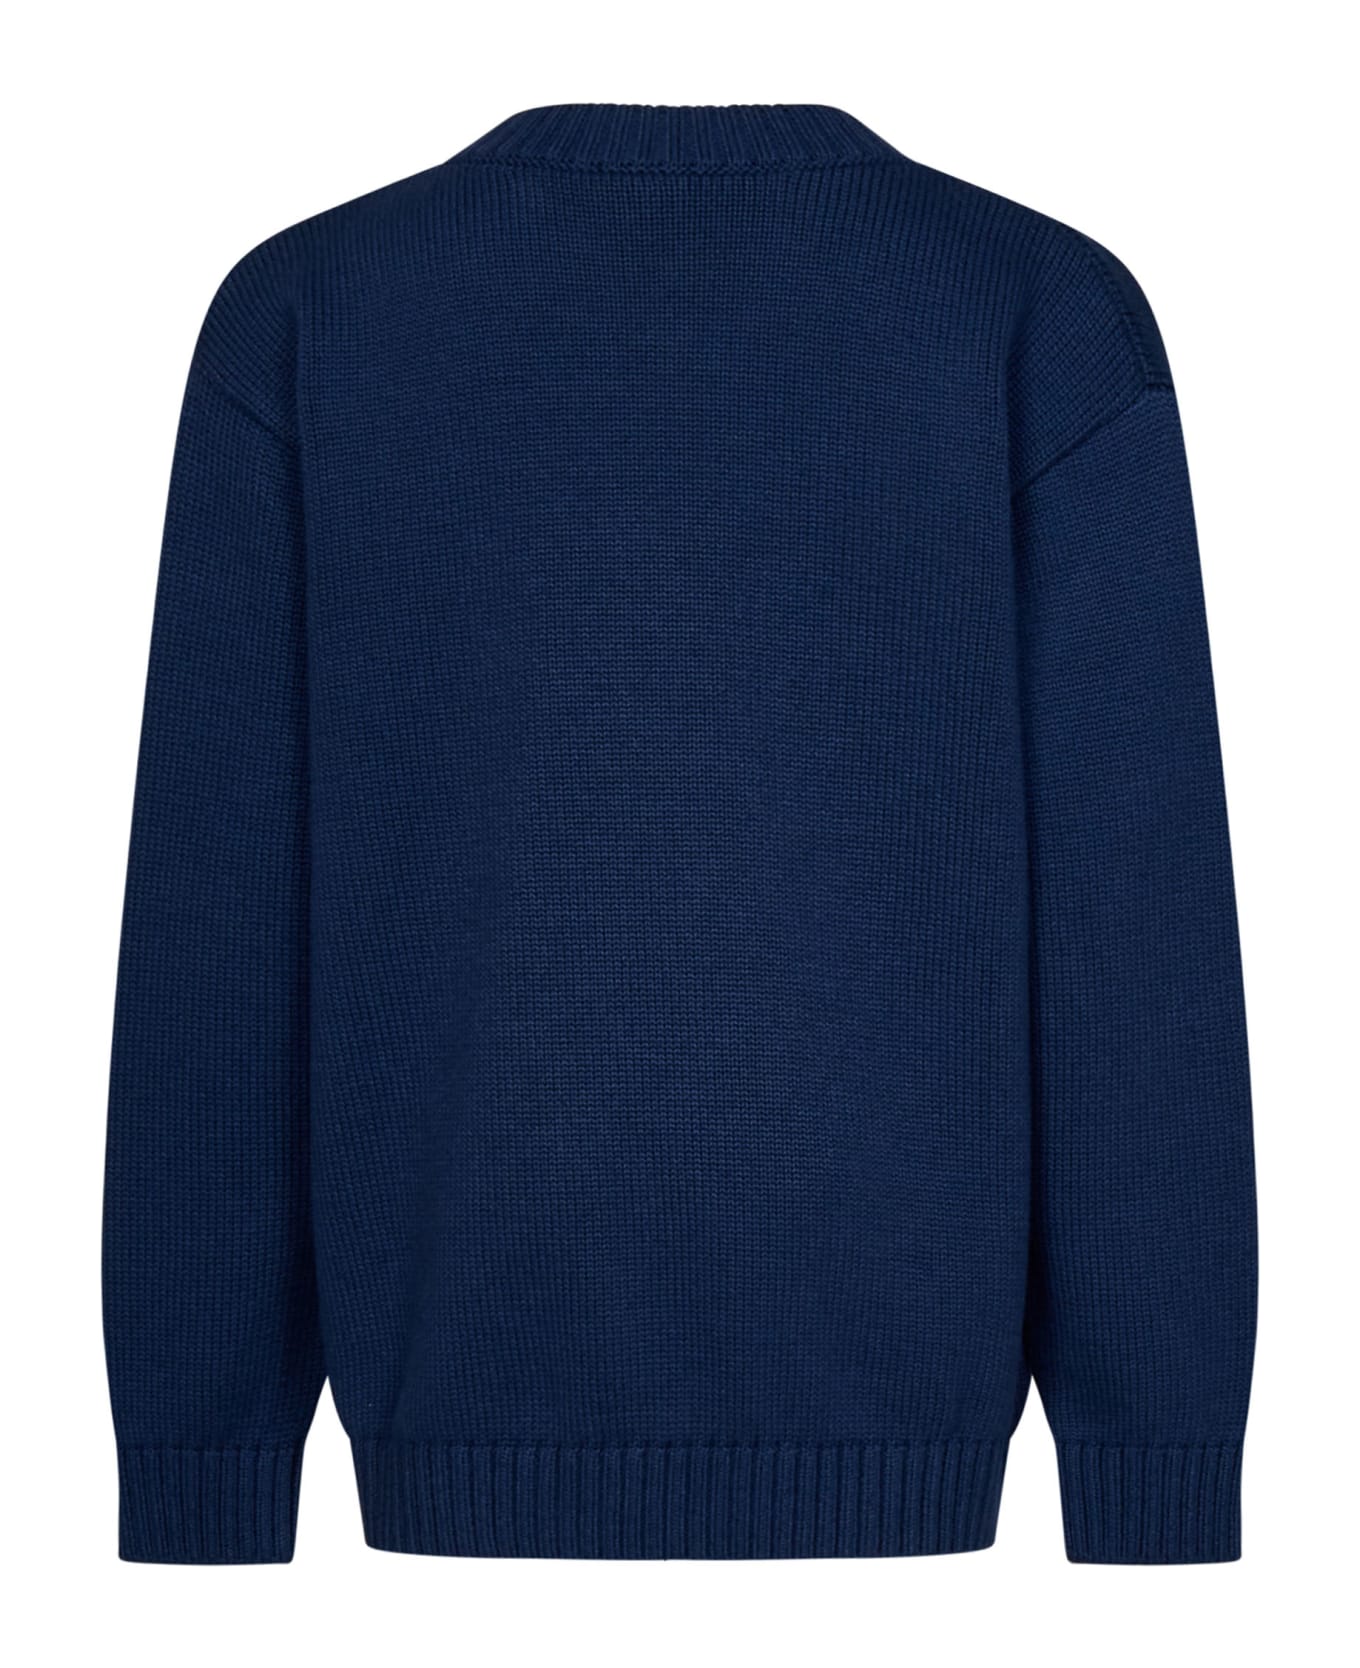 Fendi Kids Sweater - Blue